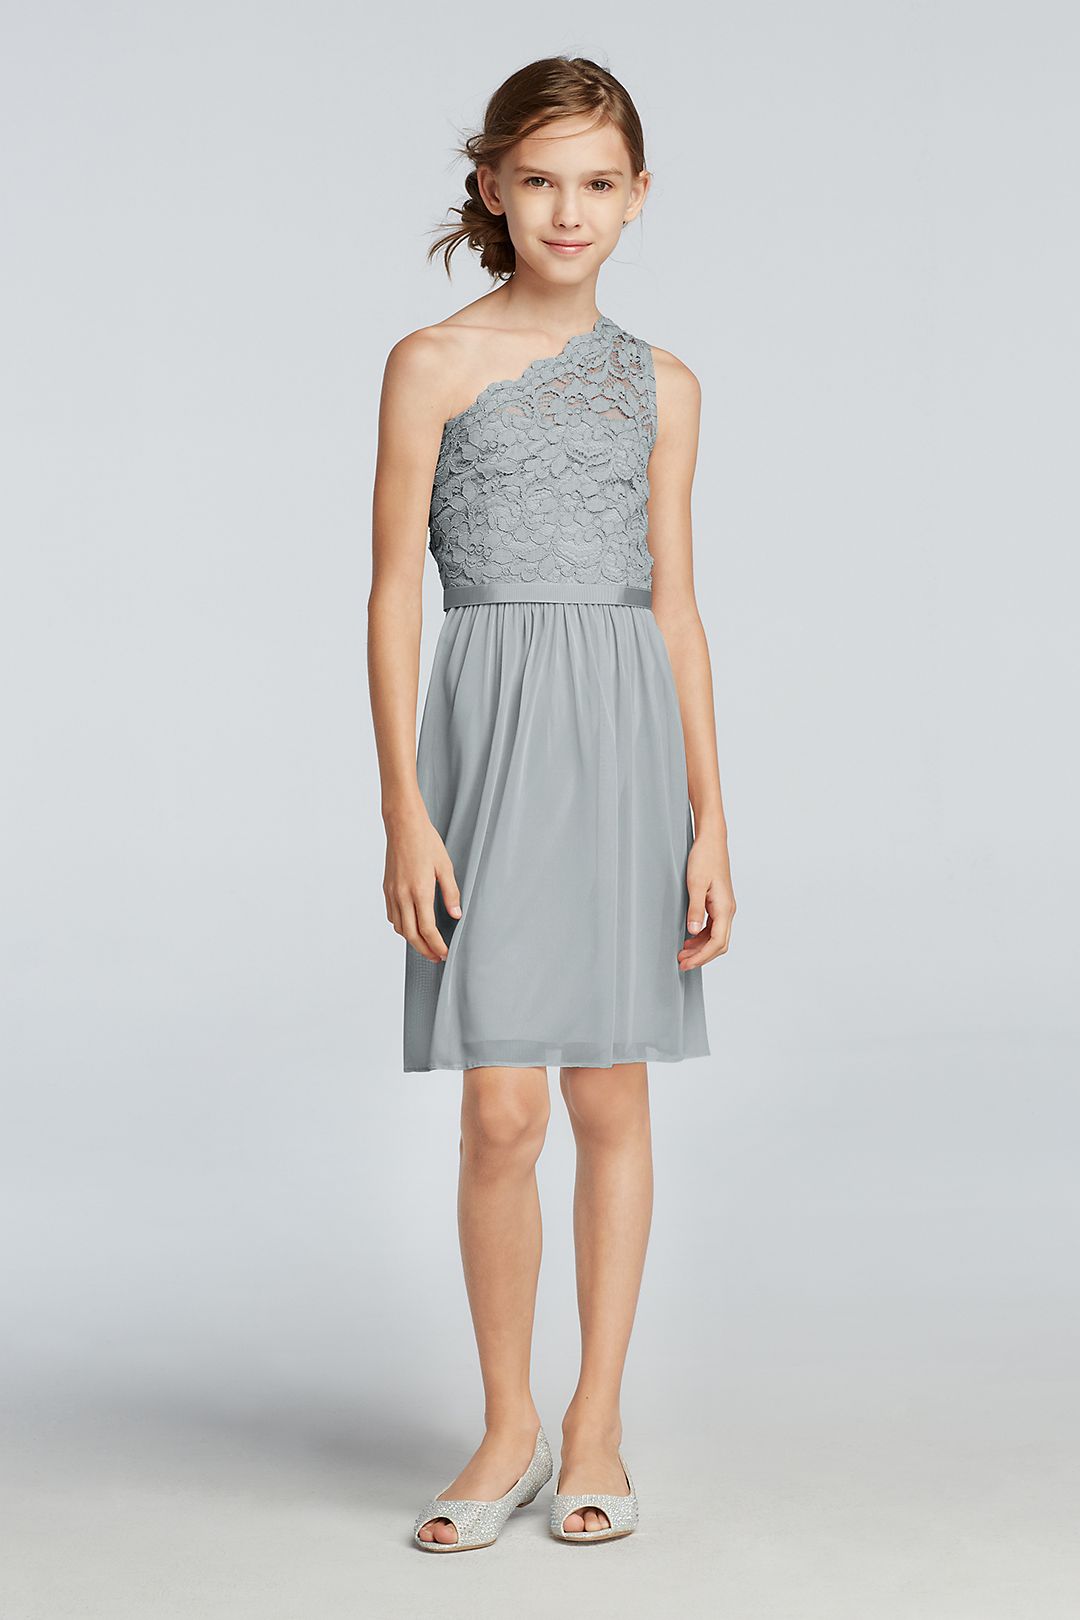 Short One Shoulder Lace Bodice Dress Image 3